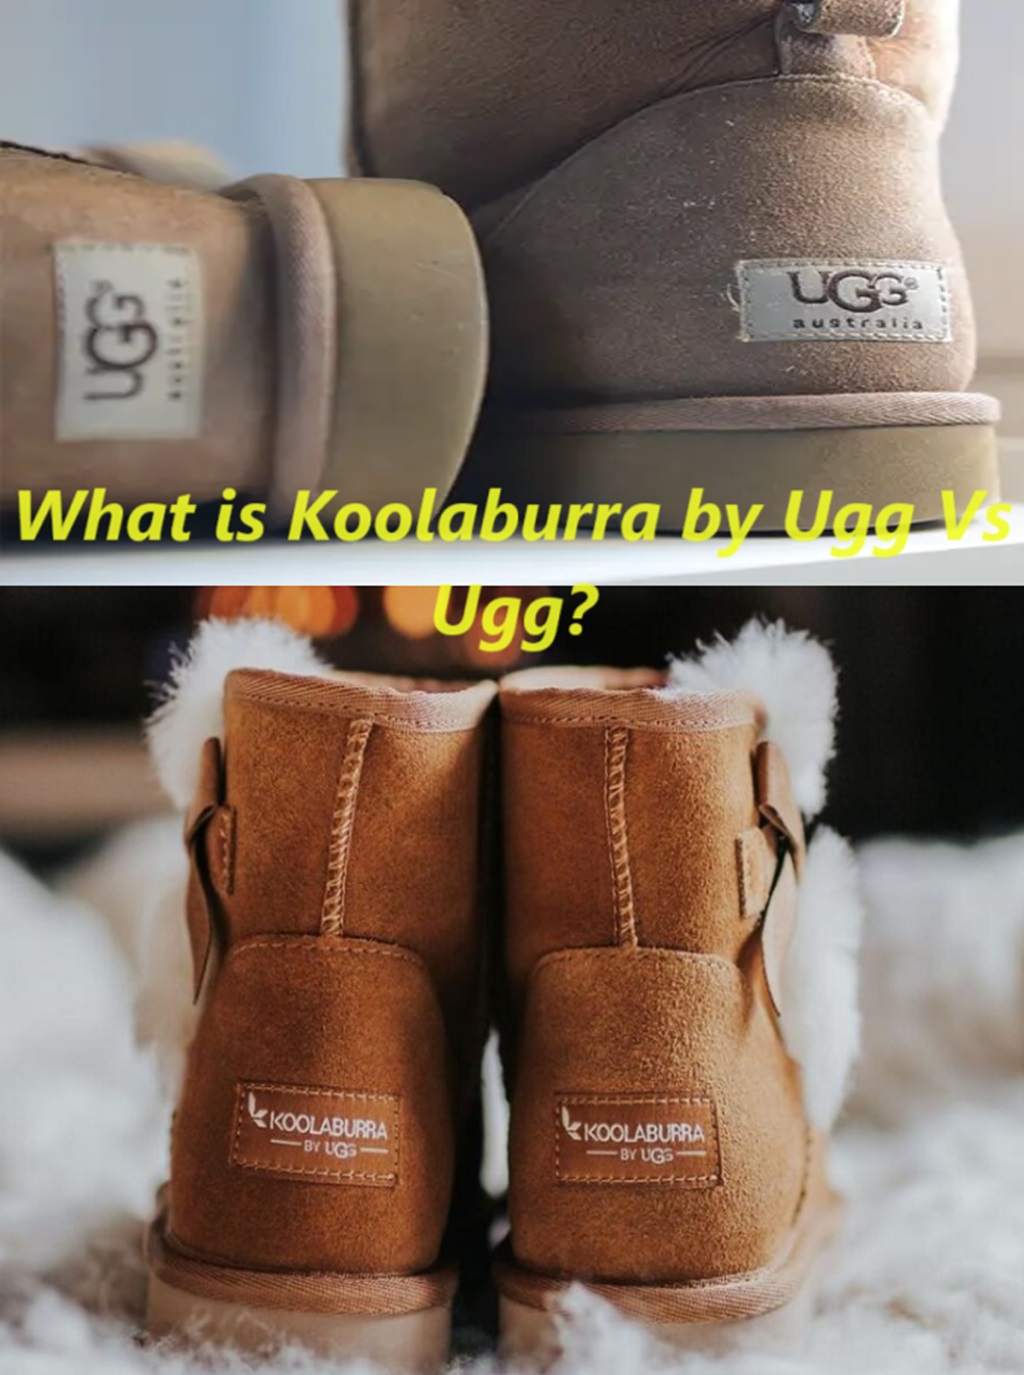 What is Koolaburra by Ugg Vs Ugg?